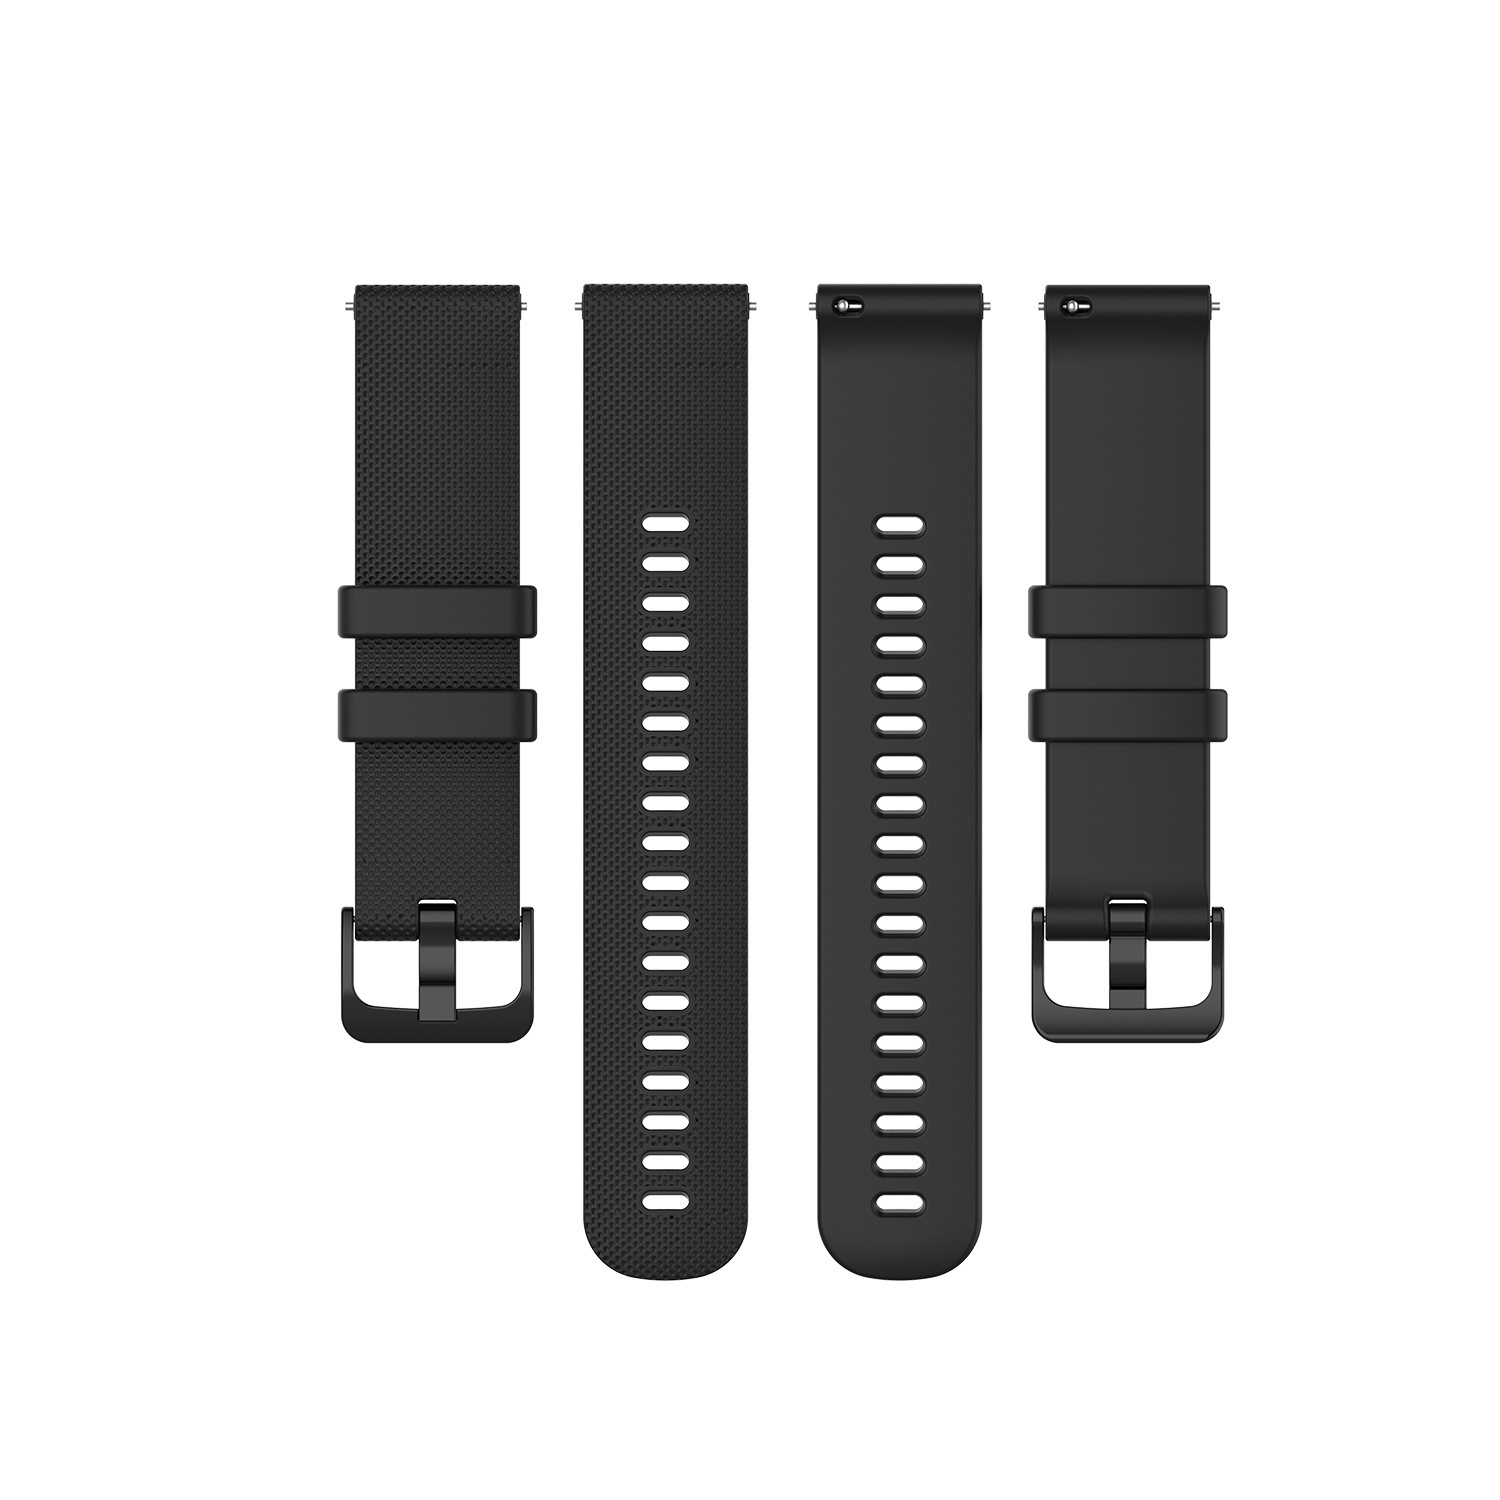 Cinturino sport con fibbia per Huawei Watch GT - nero